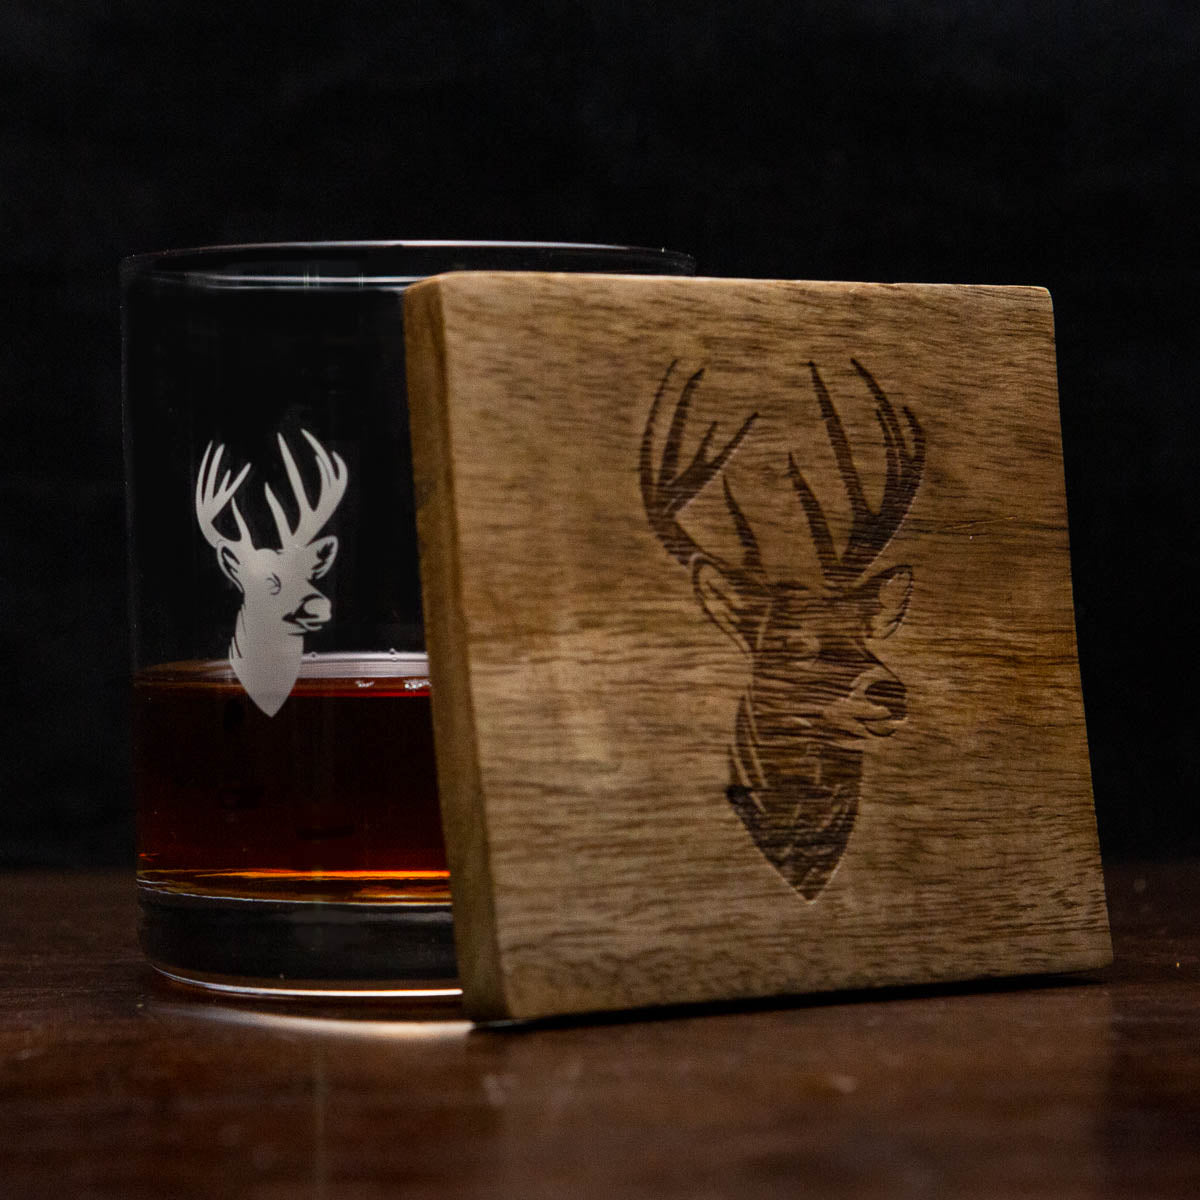 Glasses- Royal Standard Rocks Glass Gift Set Deer